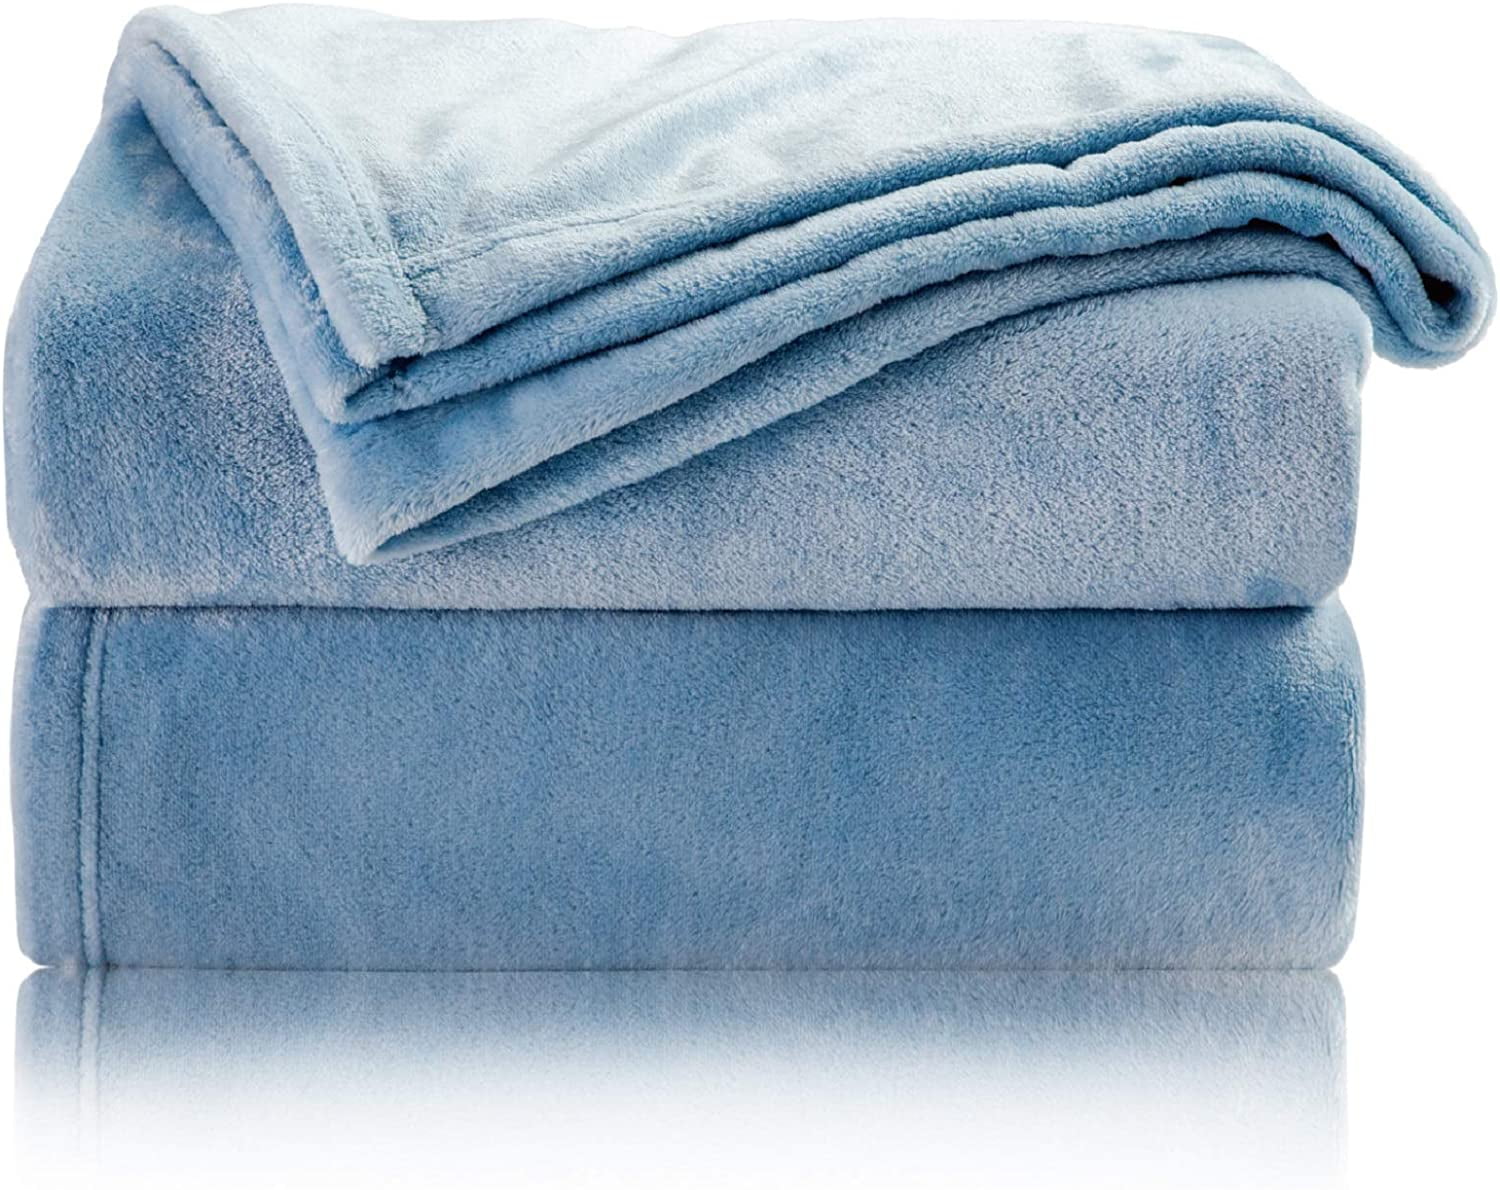 XL 150x200 Plaid residential Blanket Colour: Blue Blanket Sofa blanket New 